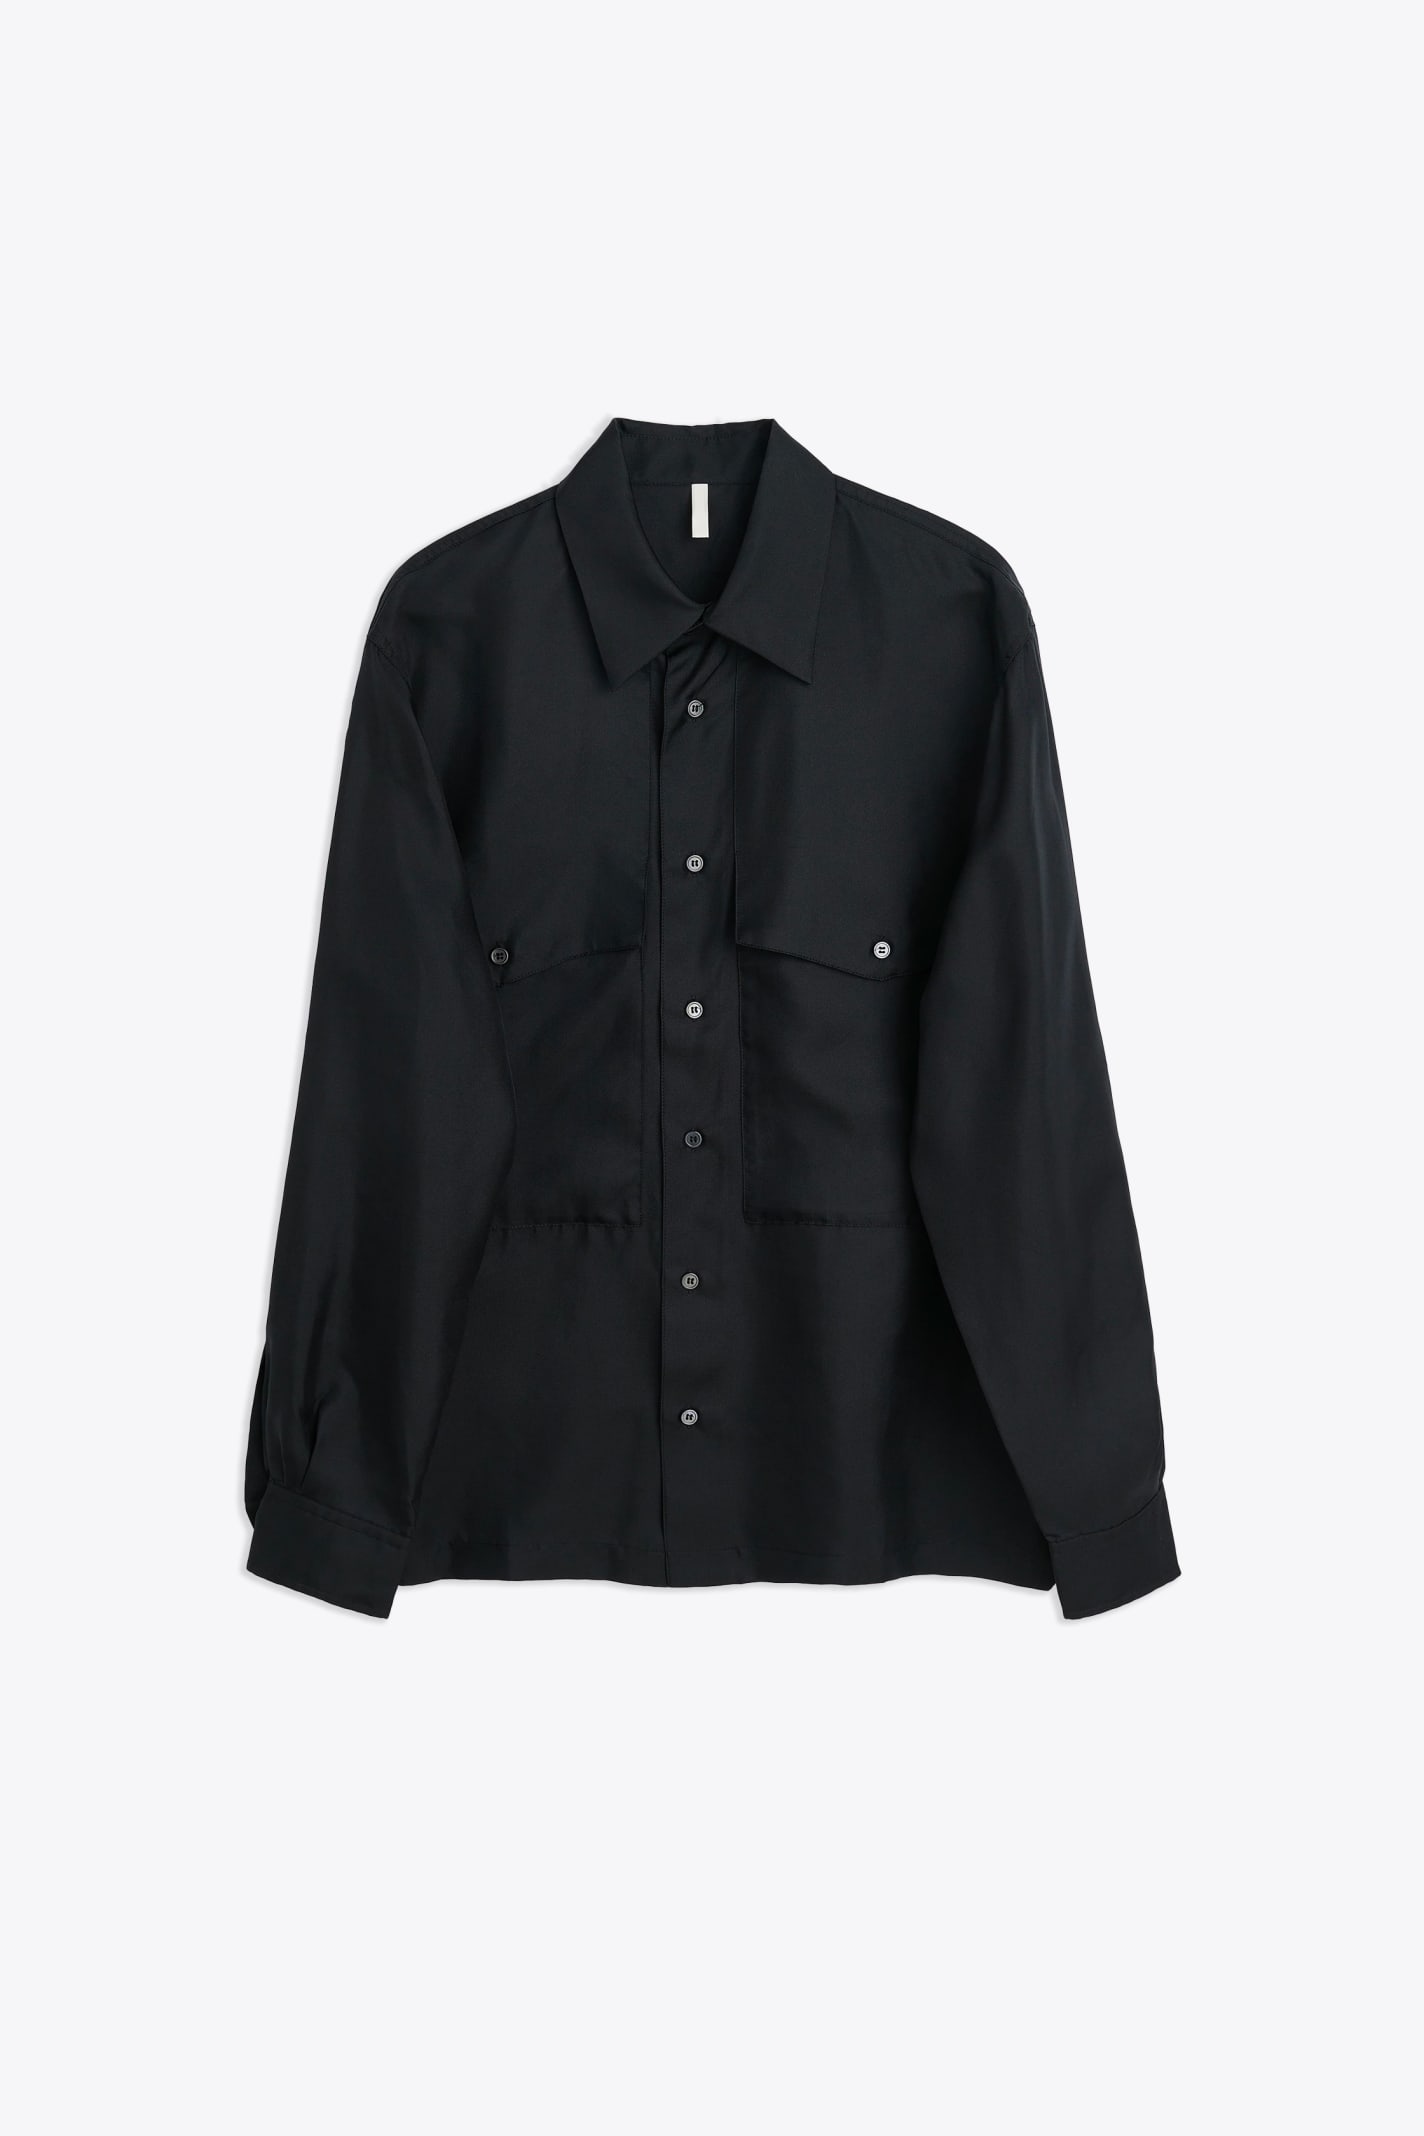 #4133 Black silk shirt with long sleeves - Silk Shirt